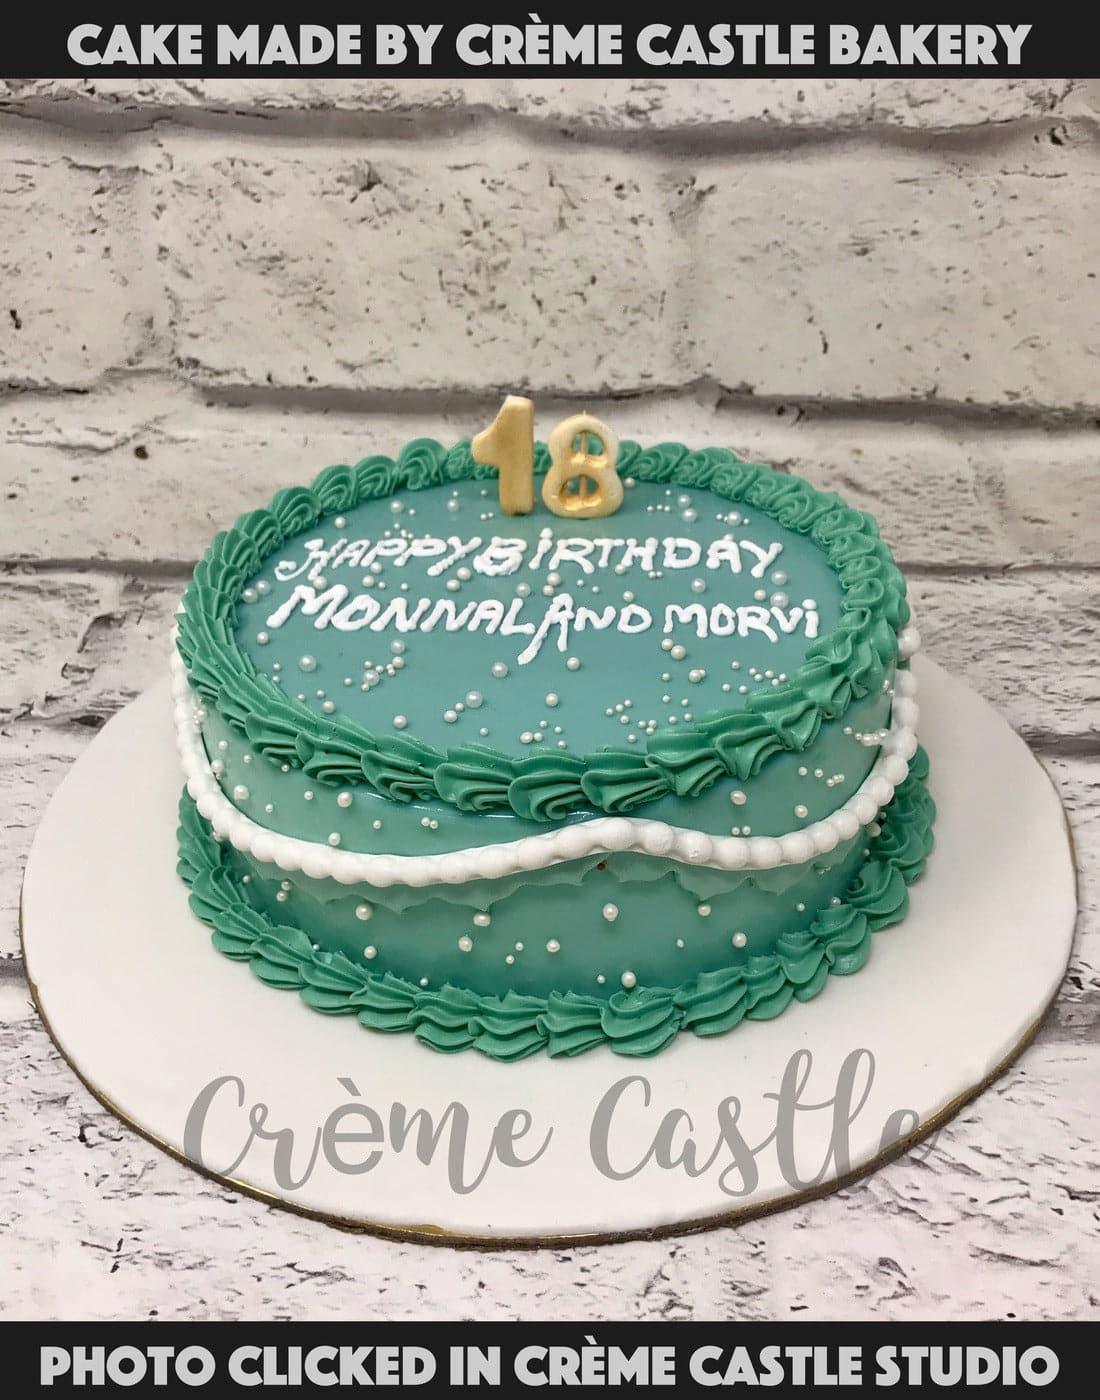 Women's Day Dream Cake | Women's Day Special Cake | CakeBee